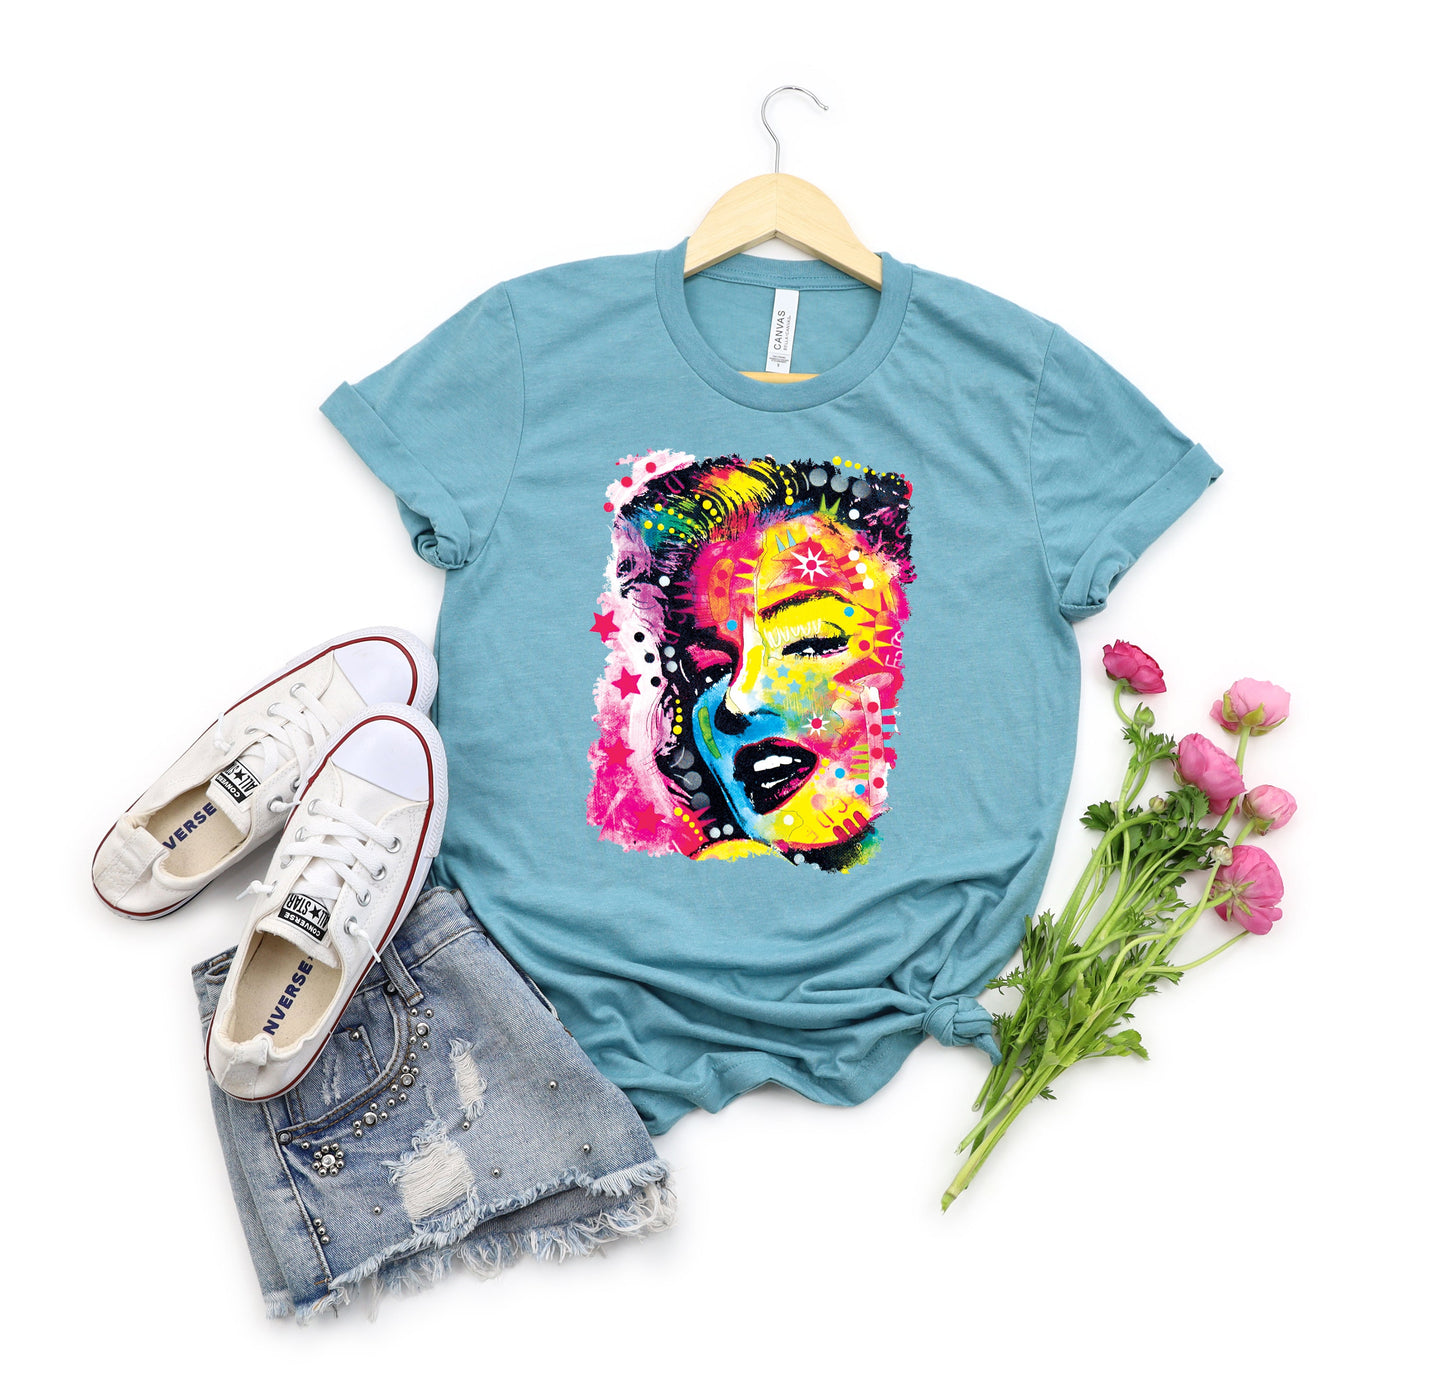 Neon Marilyn T-shirt